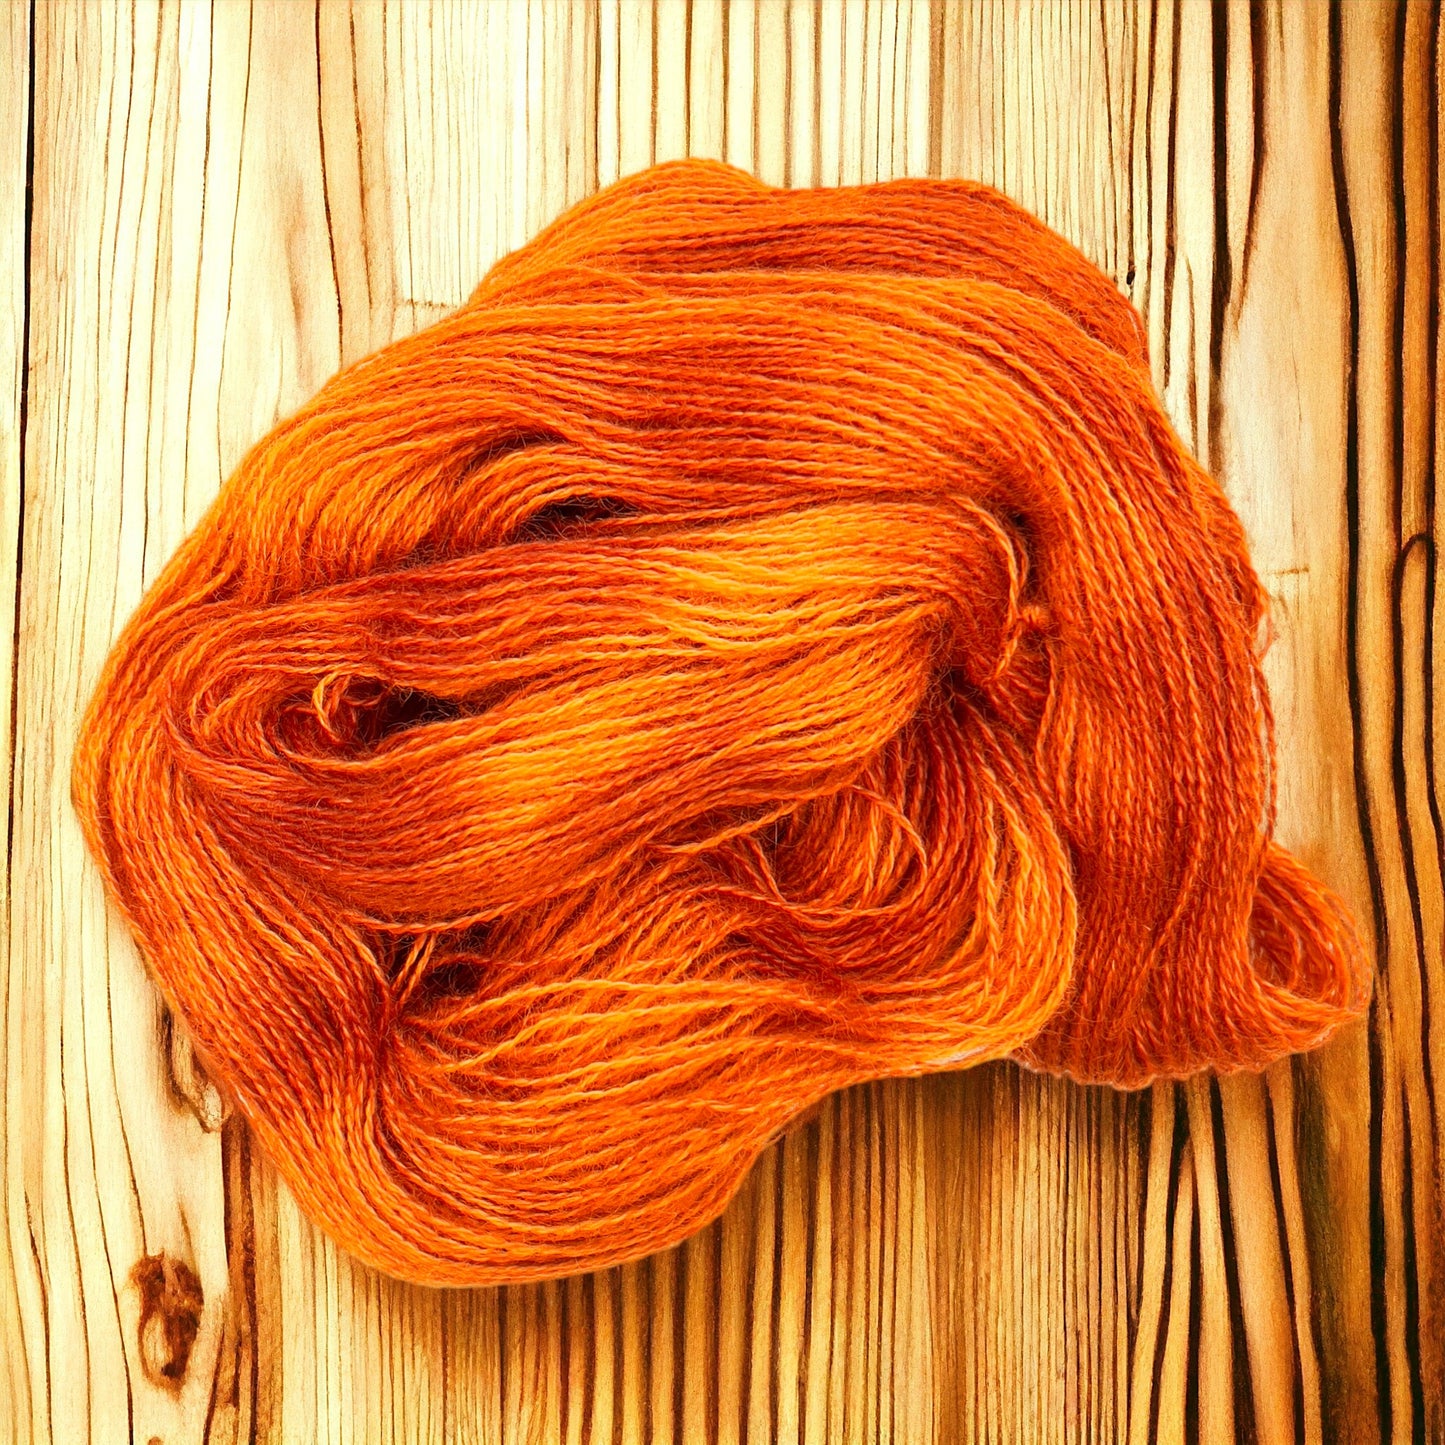 Teeswater yarn - 4ply - Skein